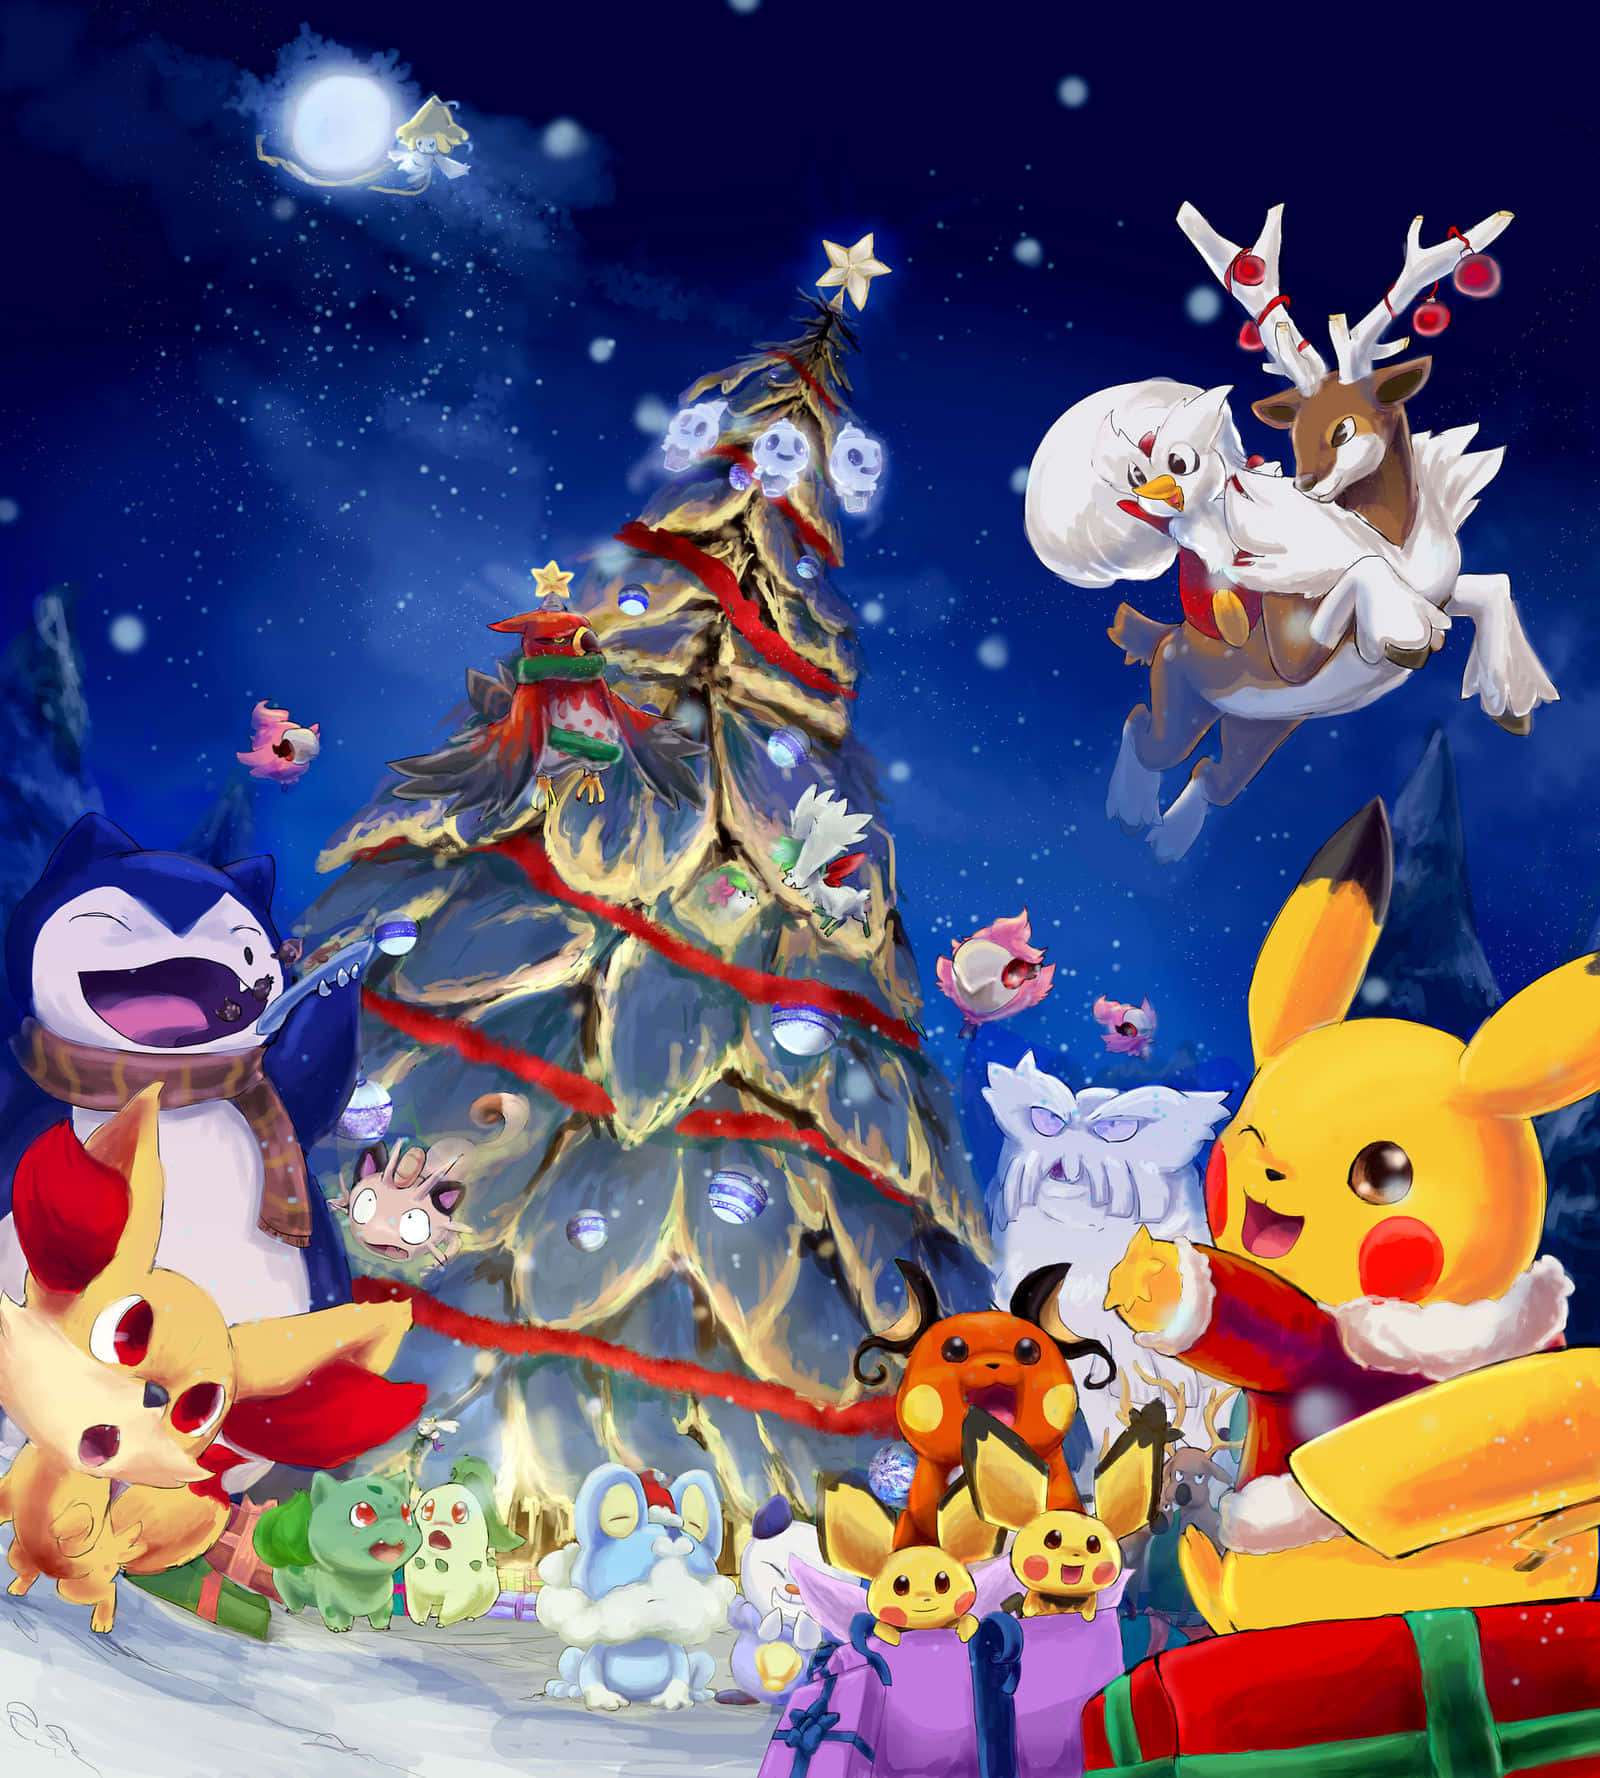 Celebrating Christmas with Pokemon Wallpaper